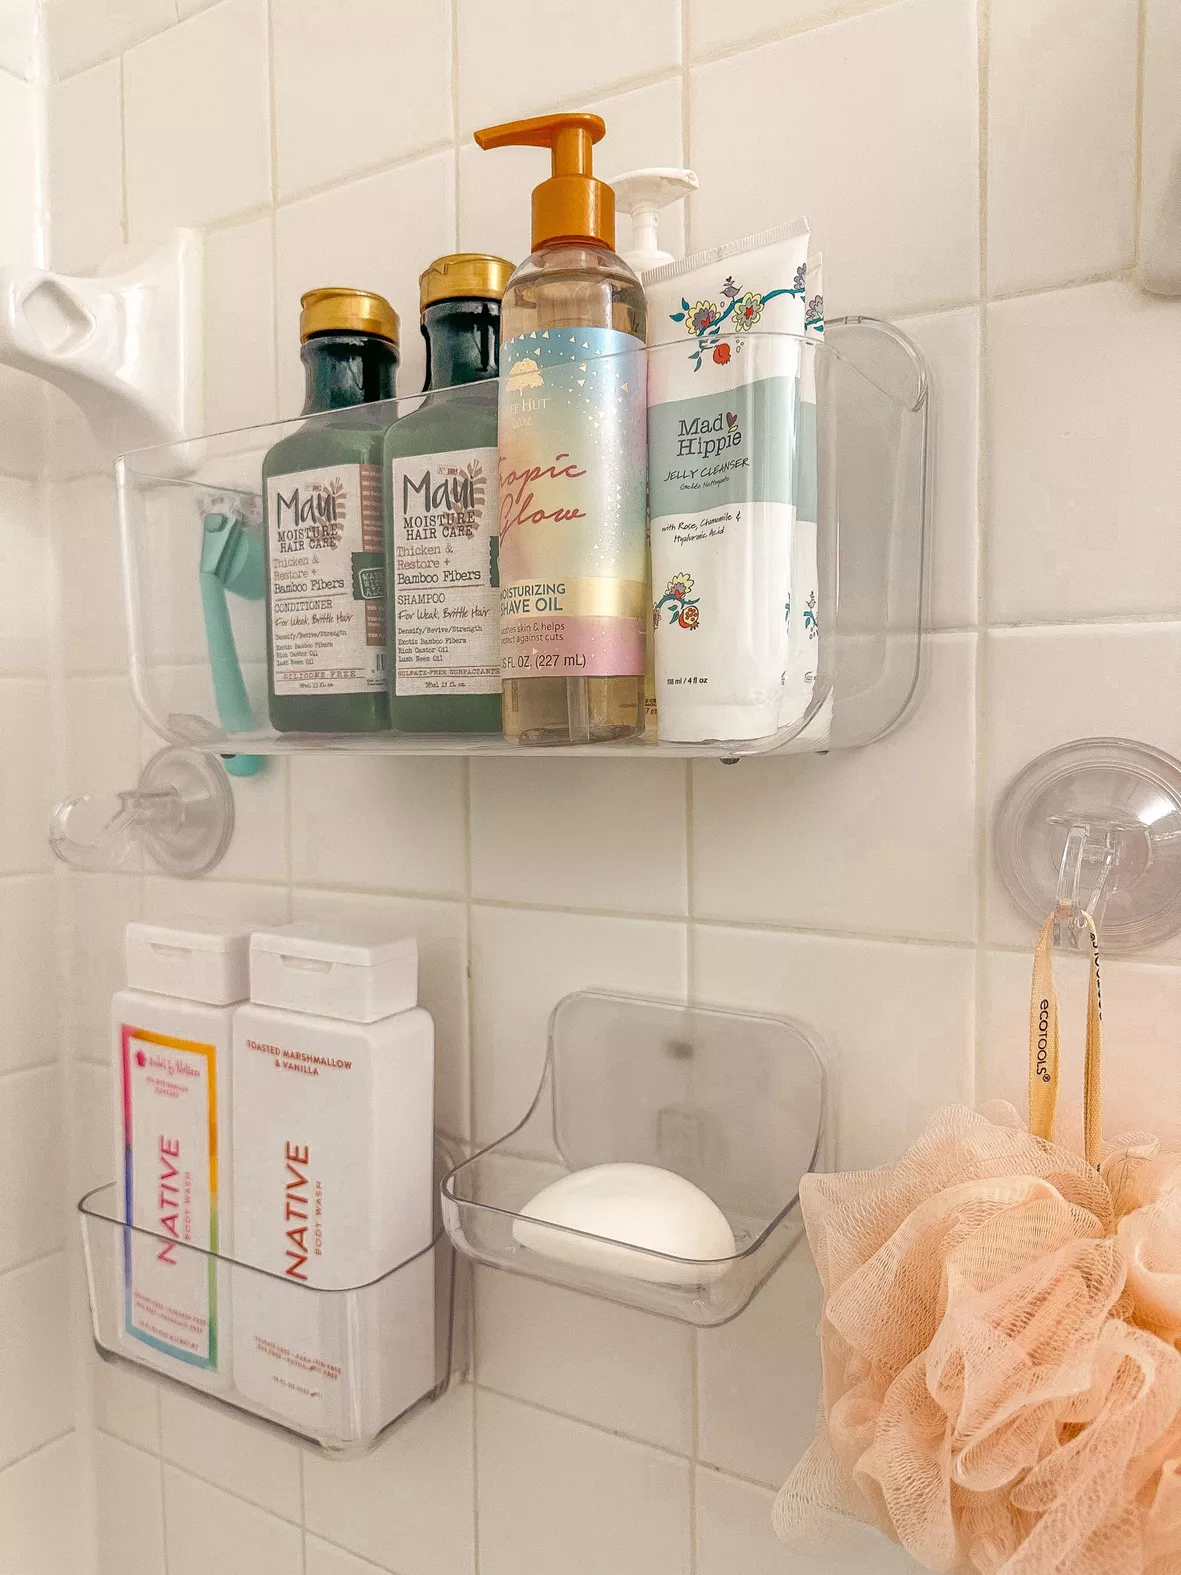 JNDETOP Shower shelves, Adhesive Clear Acrylic Bathroom Shower